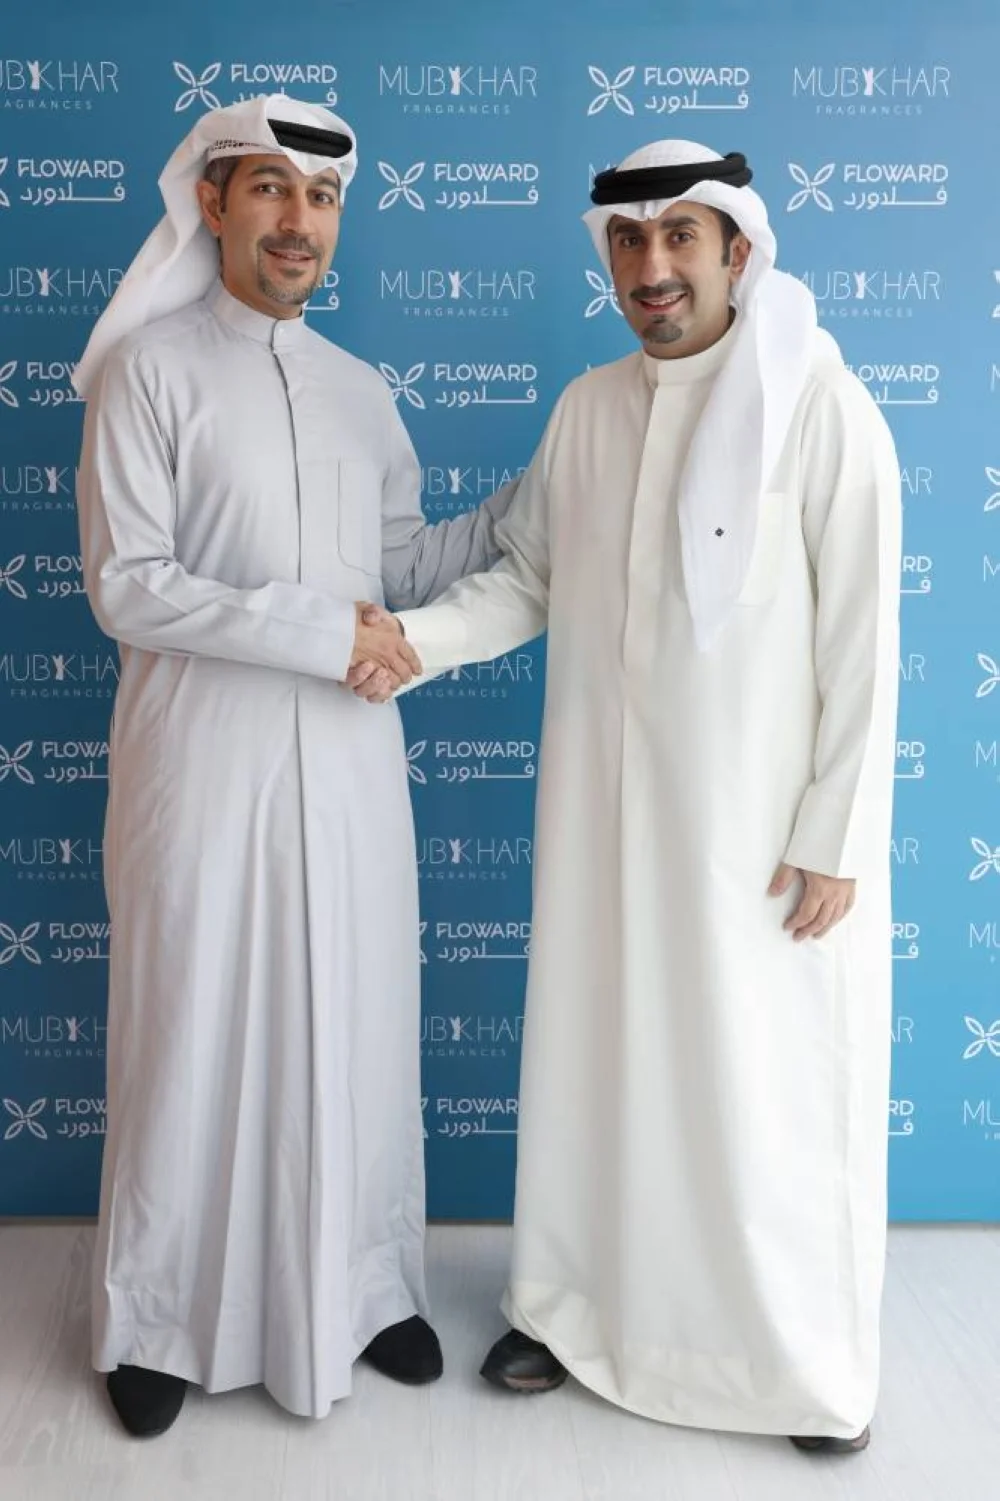 Mubkhar CEO Khaled Nawaf AlManaa Floward CEO Abdulaziz B. Al Loughani